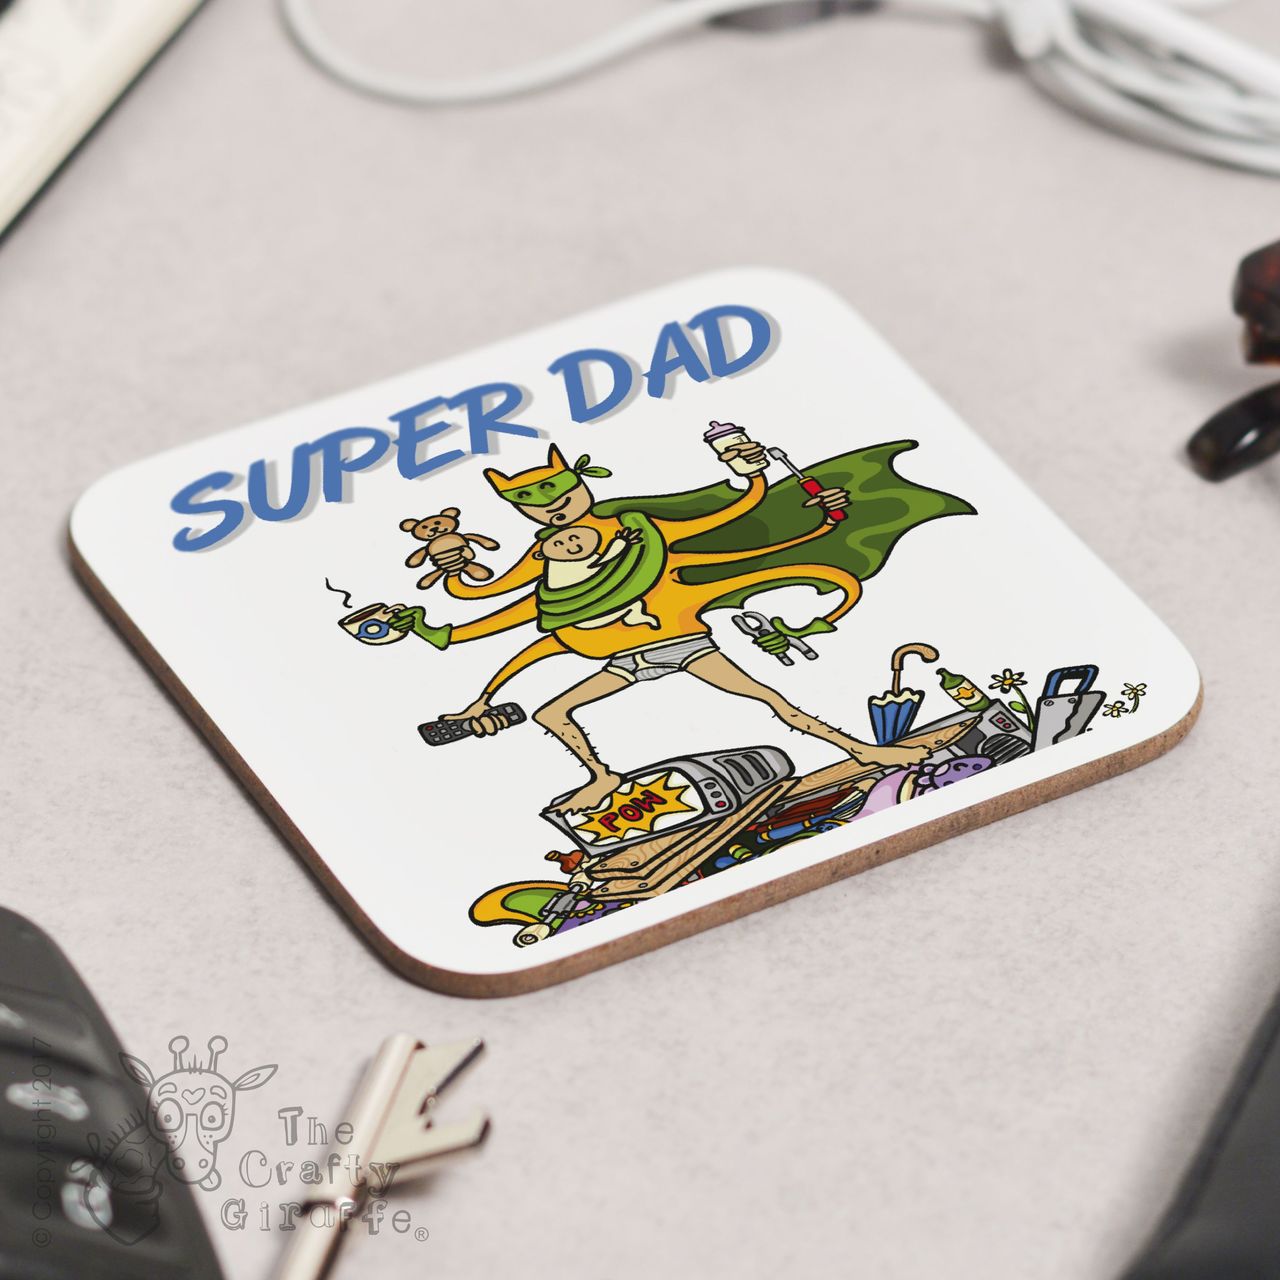 Personalised Super Dad Coaster